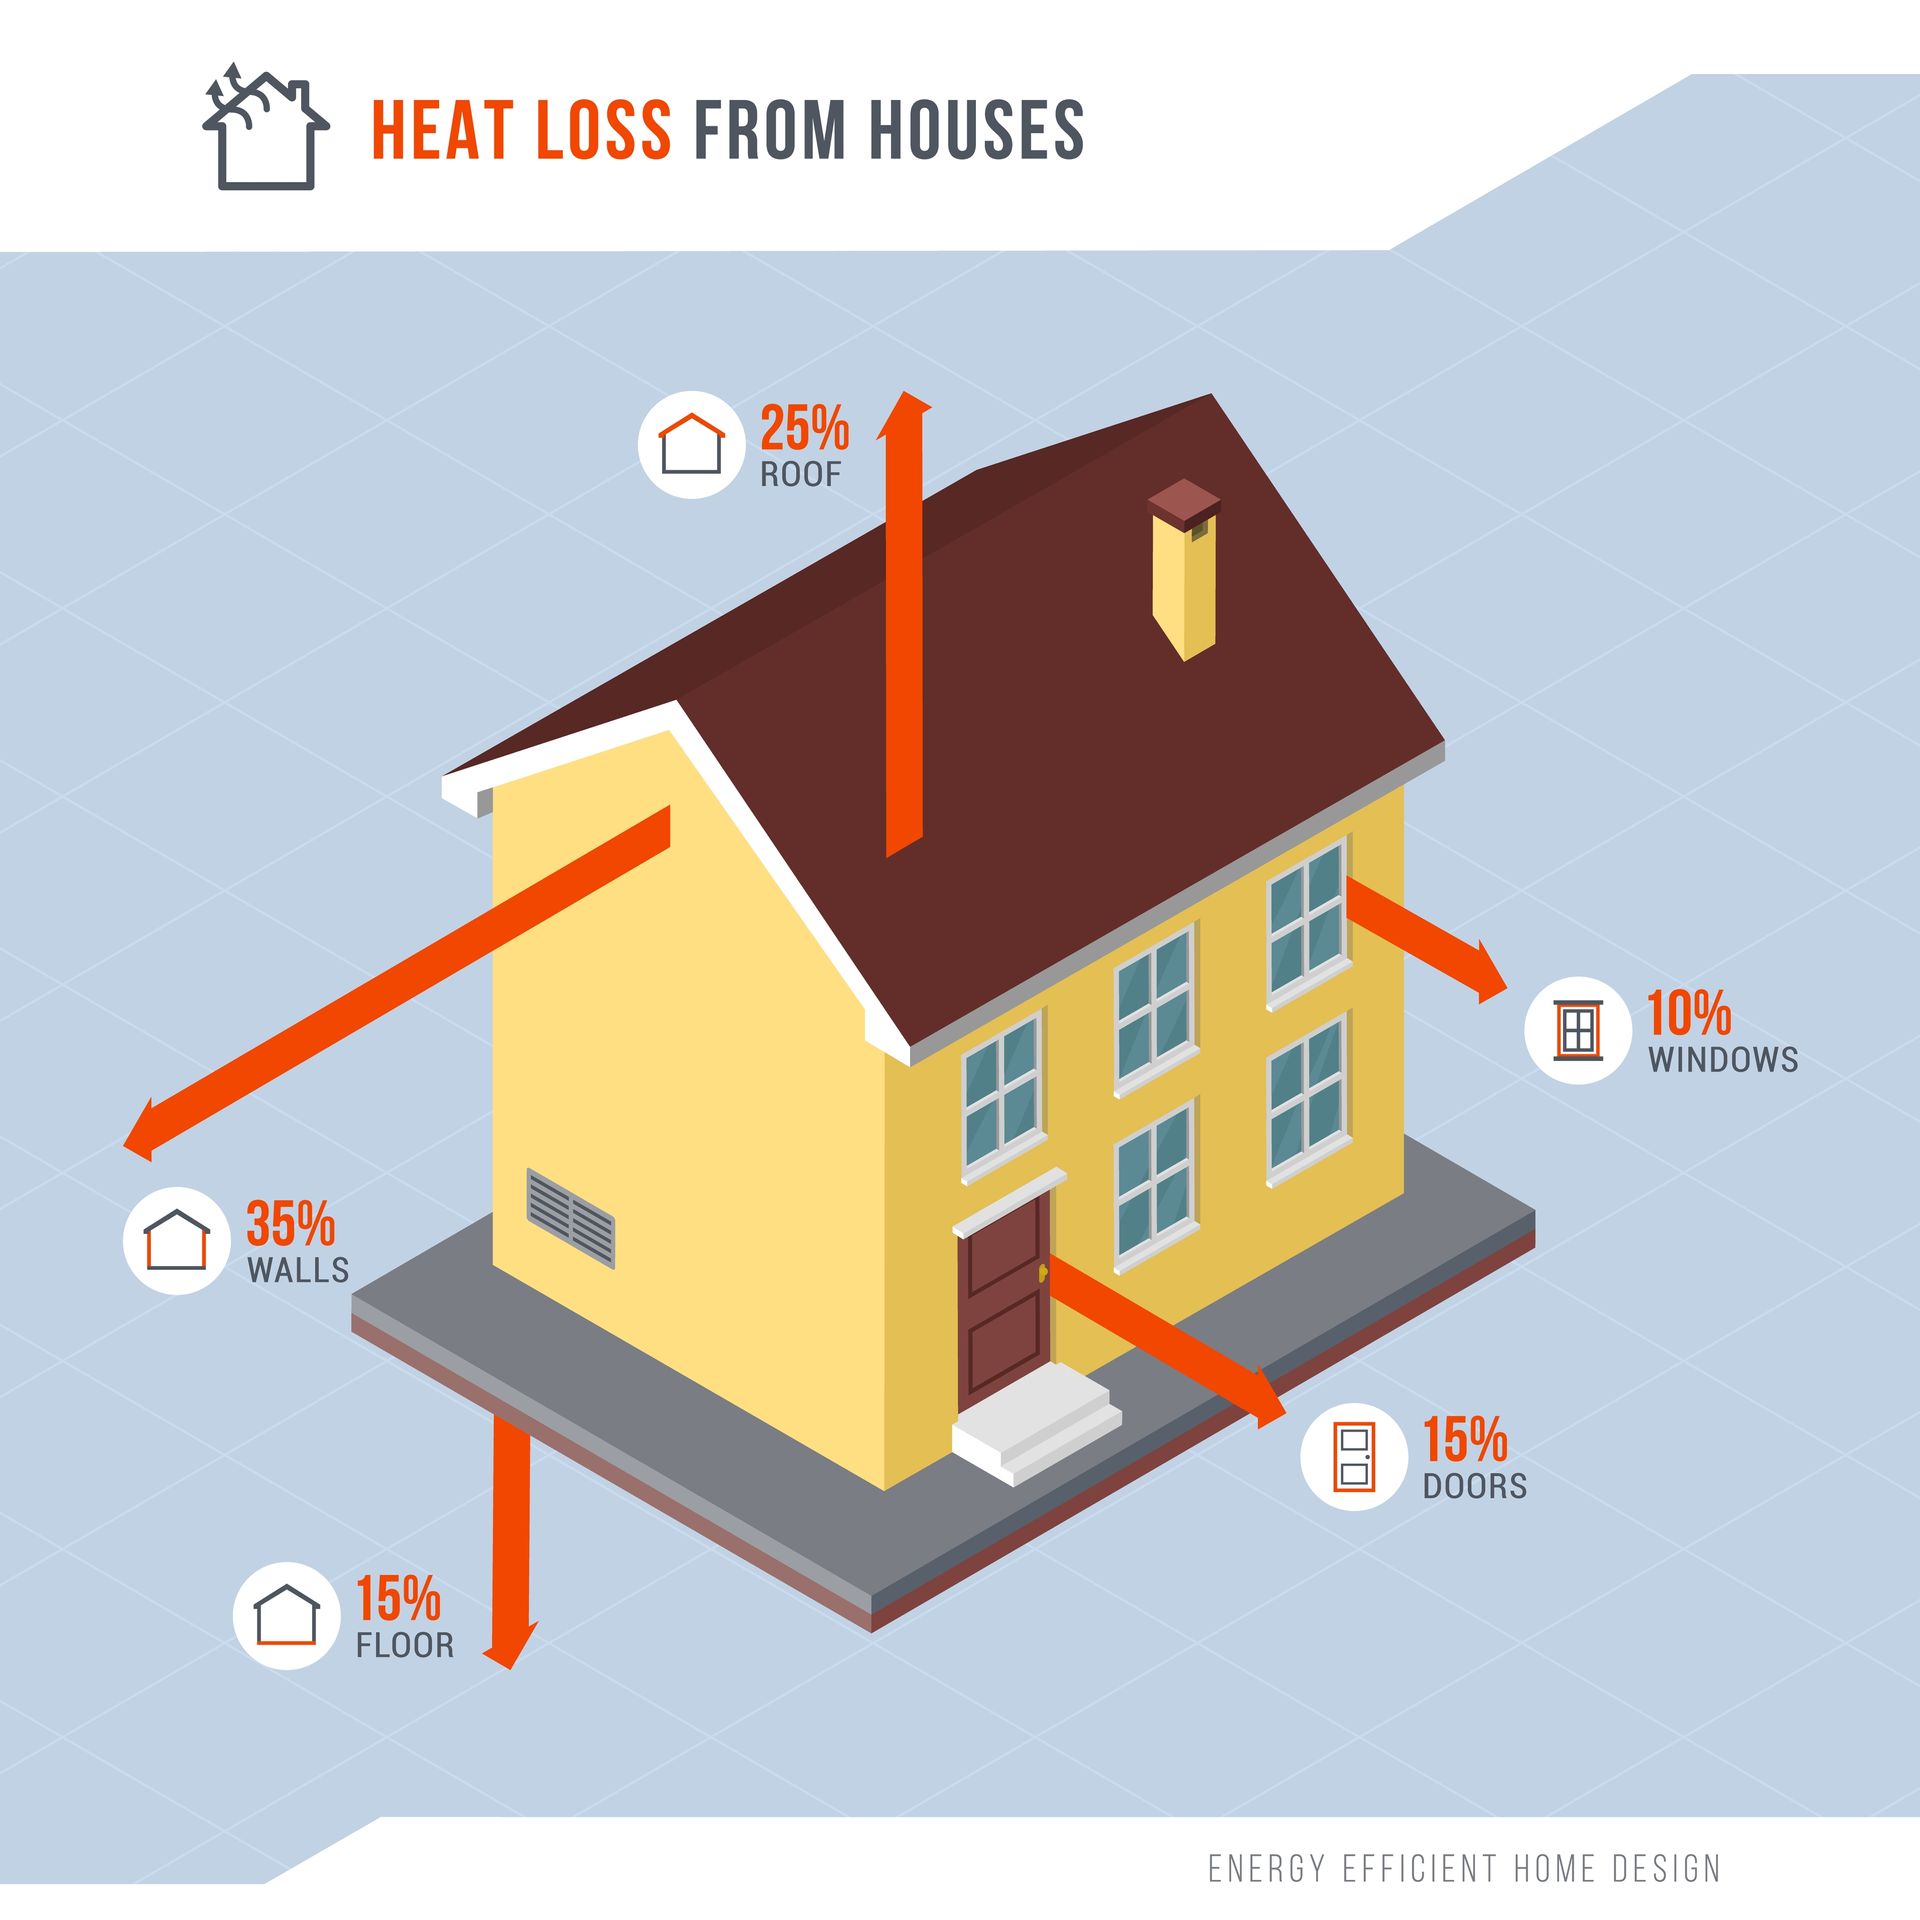 Home Heat Loss image